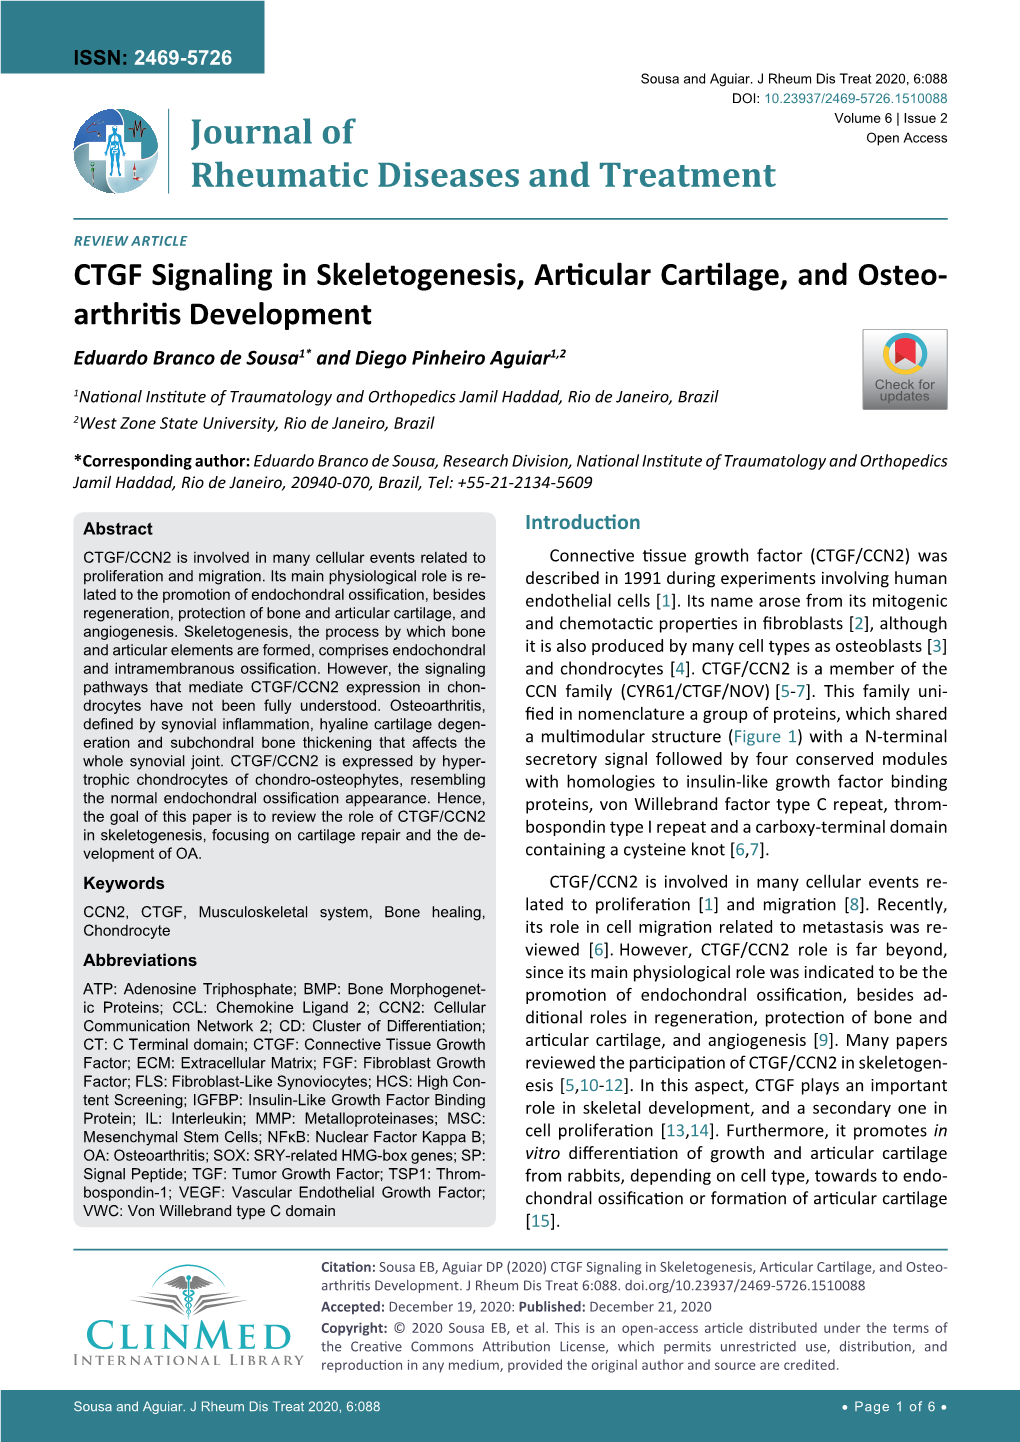 CTGF Signaling in Skeletogenesis, Articular Cartilage, And